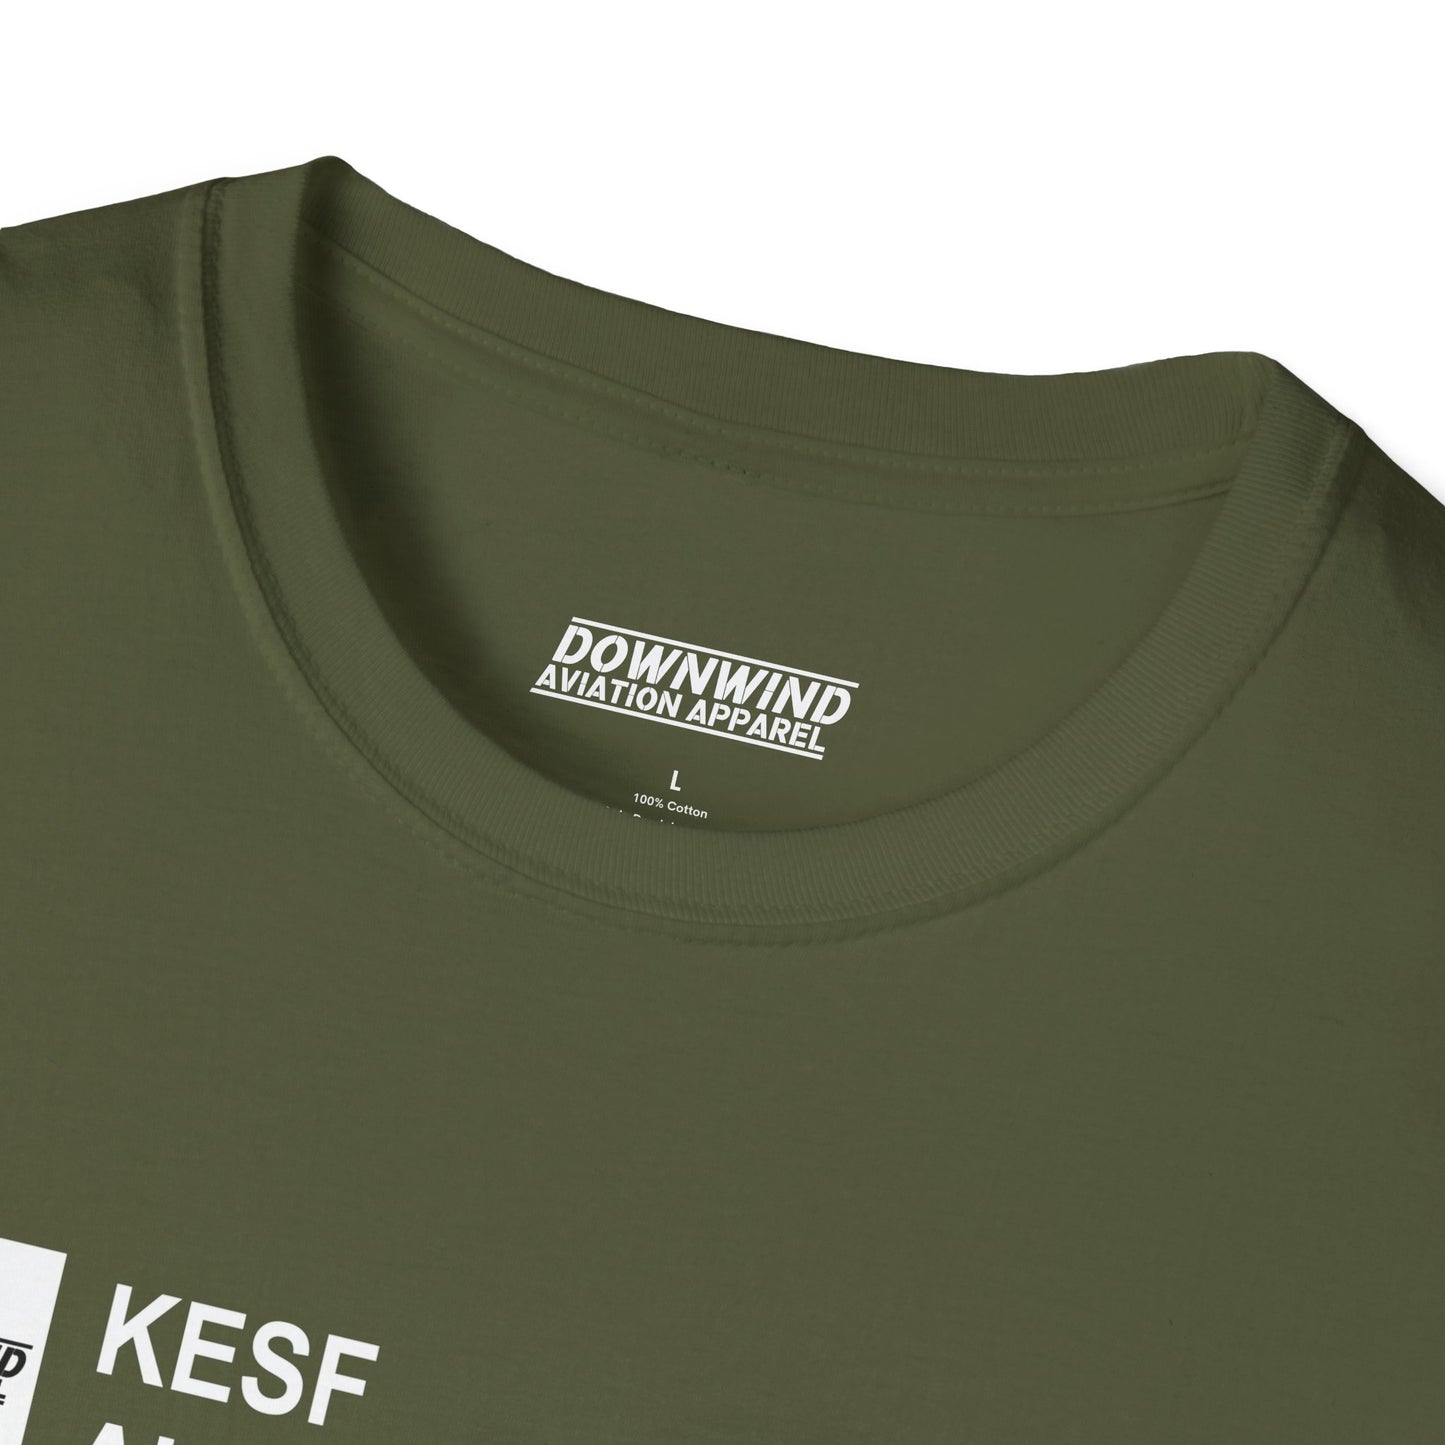 KESF / Alexandria Esler T-Shirt